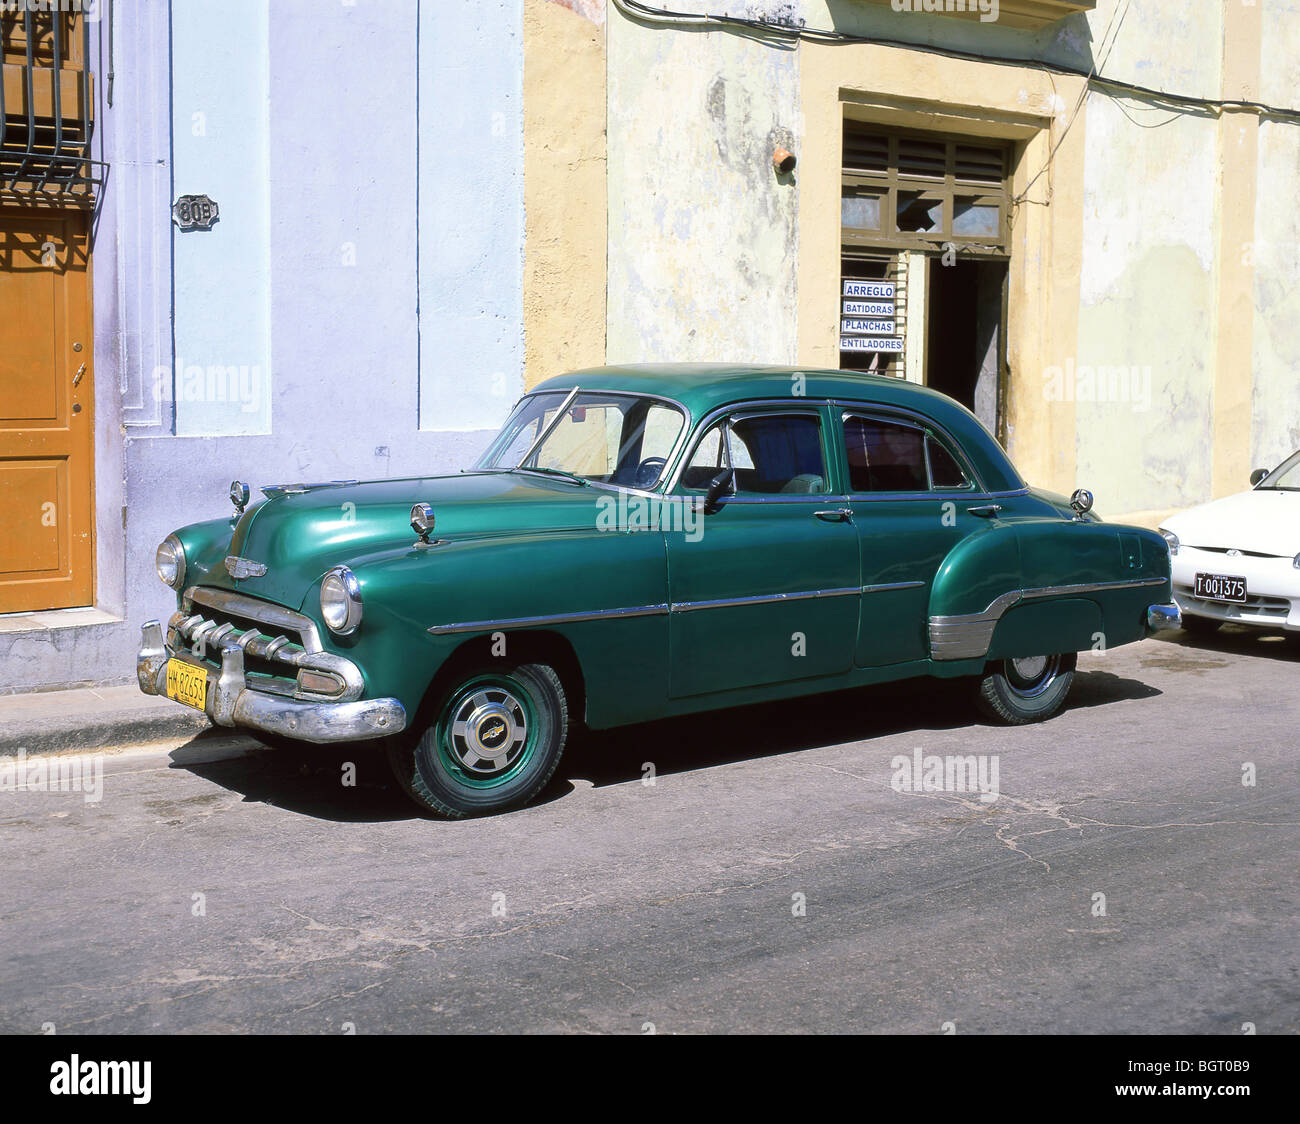 Vintage american car in street, Trinidad, Sancti Spiritus, Republic of Cuba Stock Photo